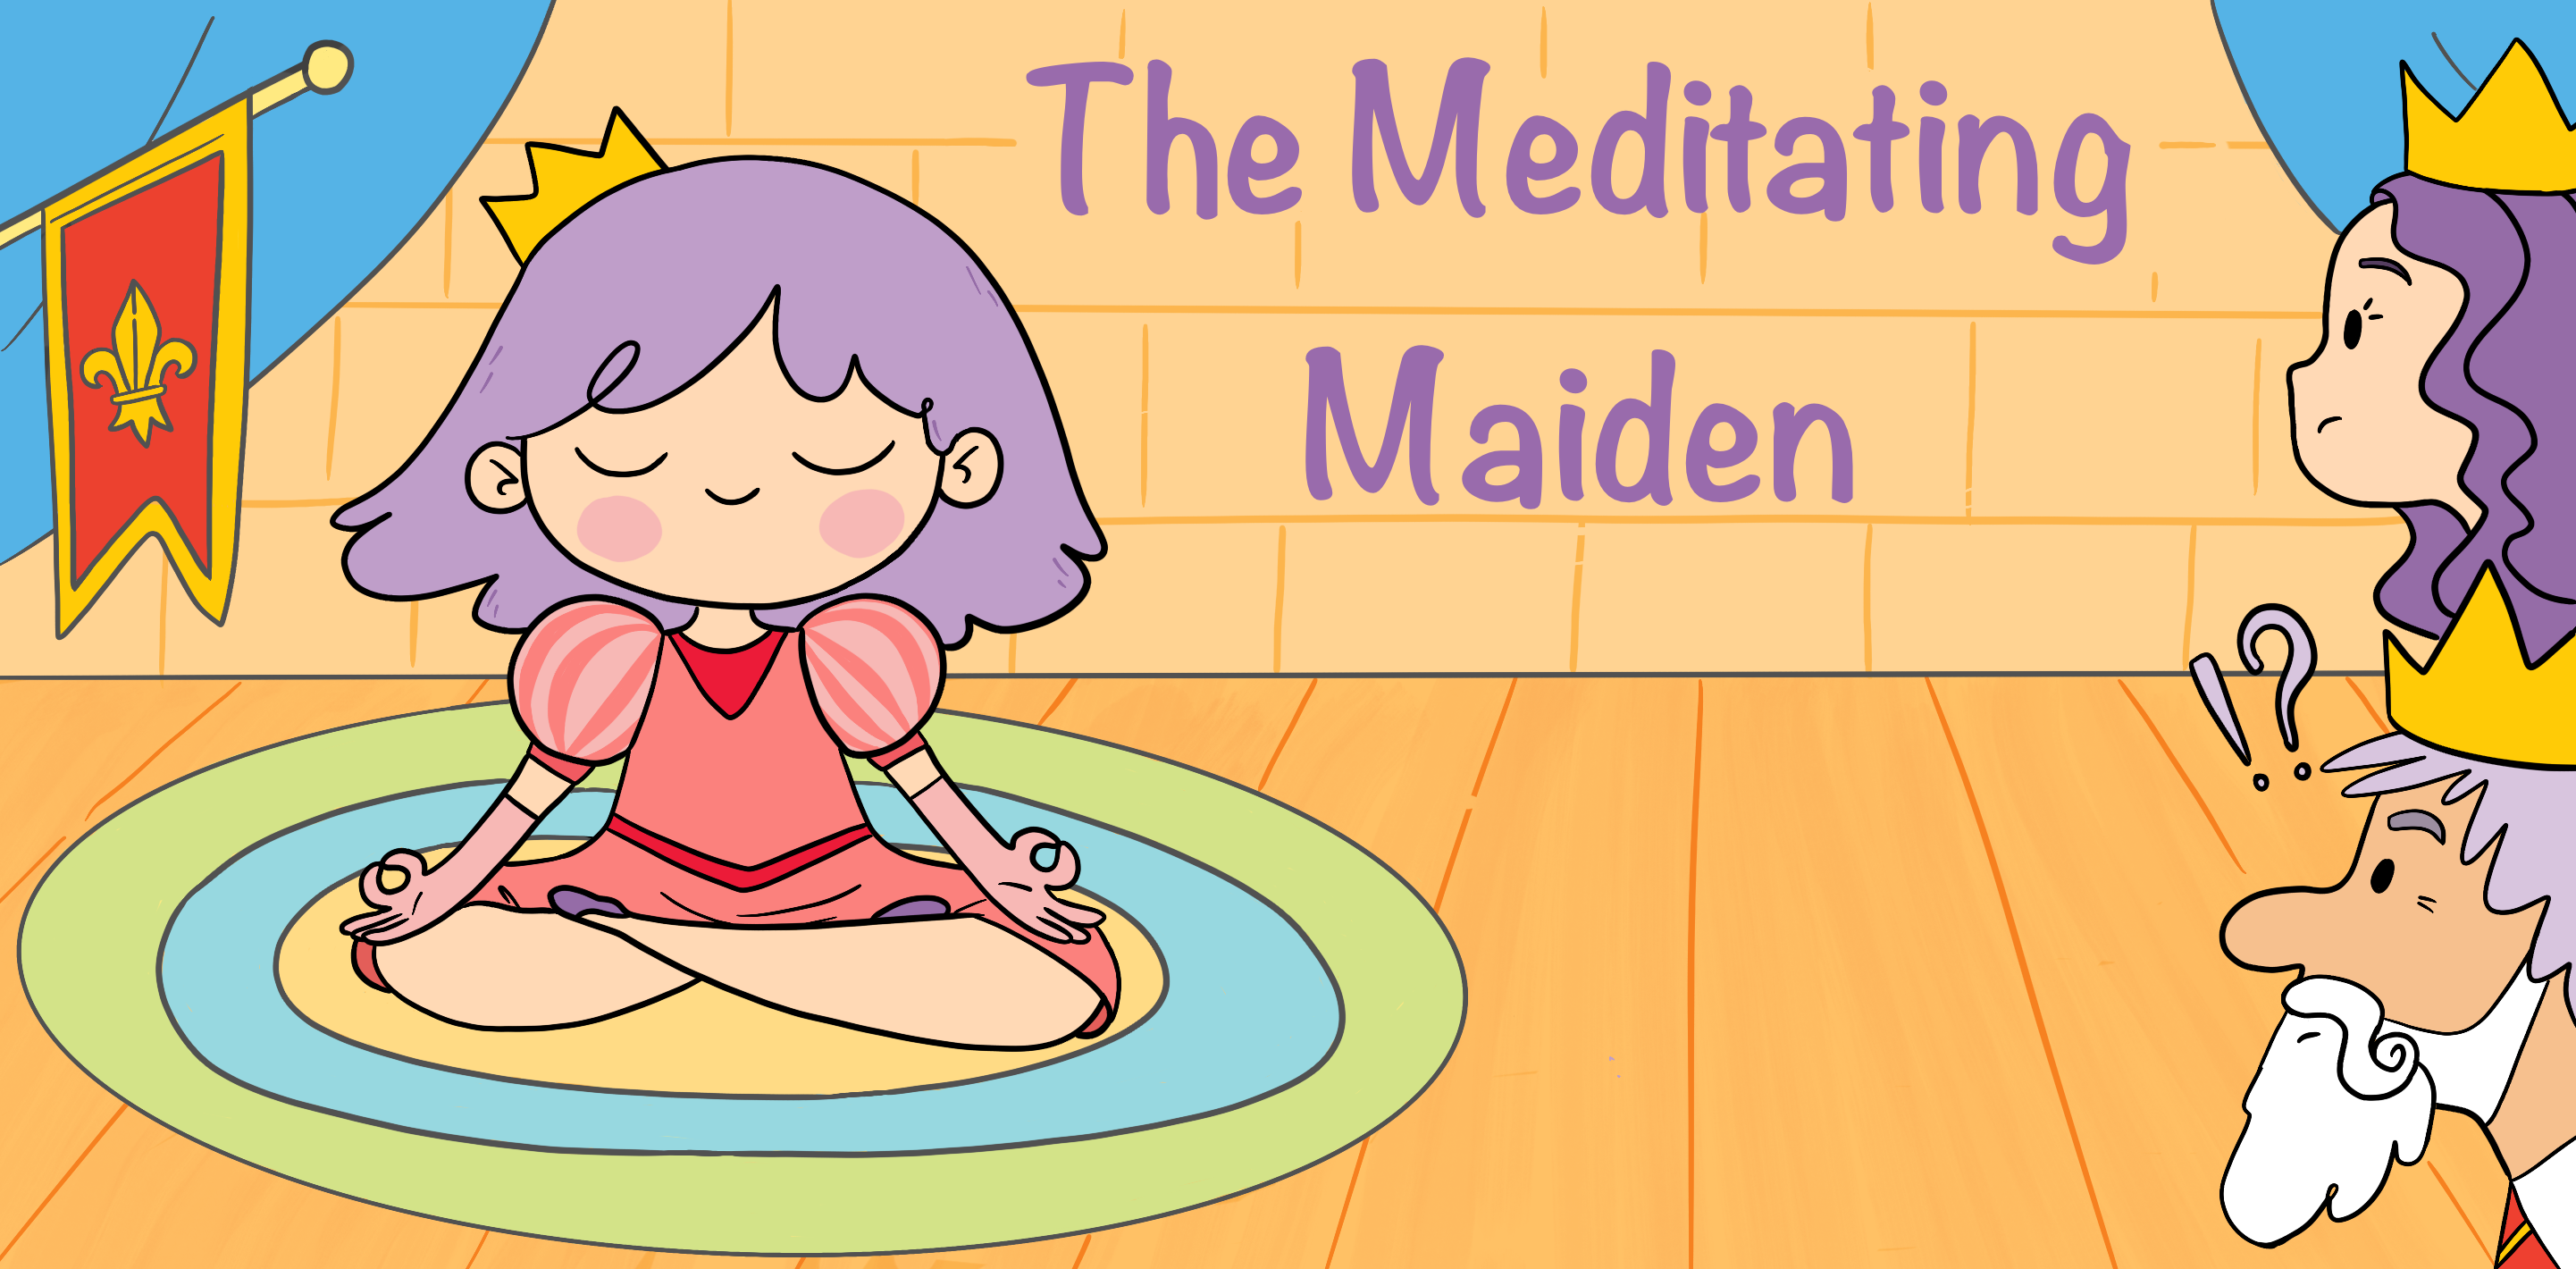 Meditating Maiden by Rebecca Weaver